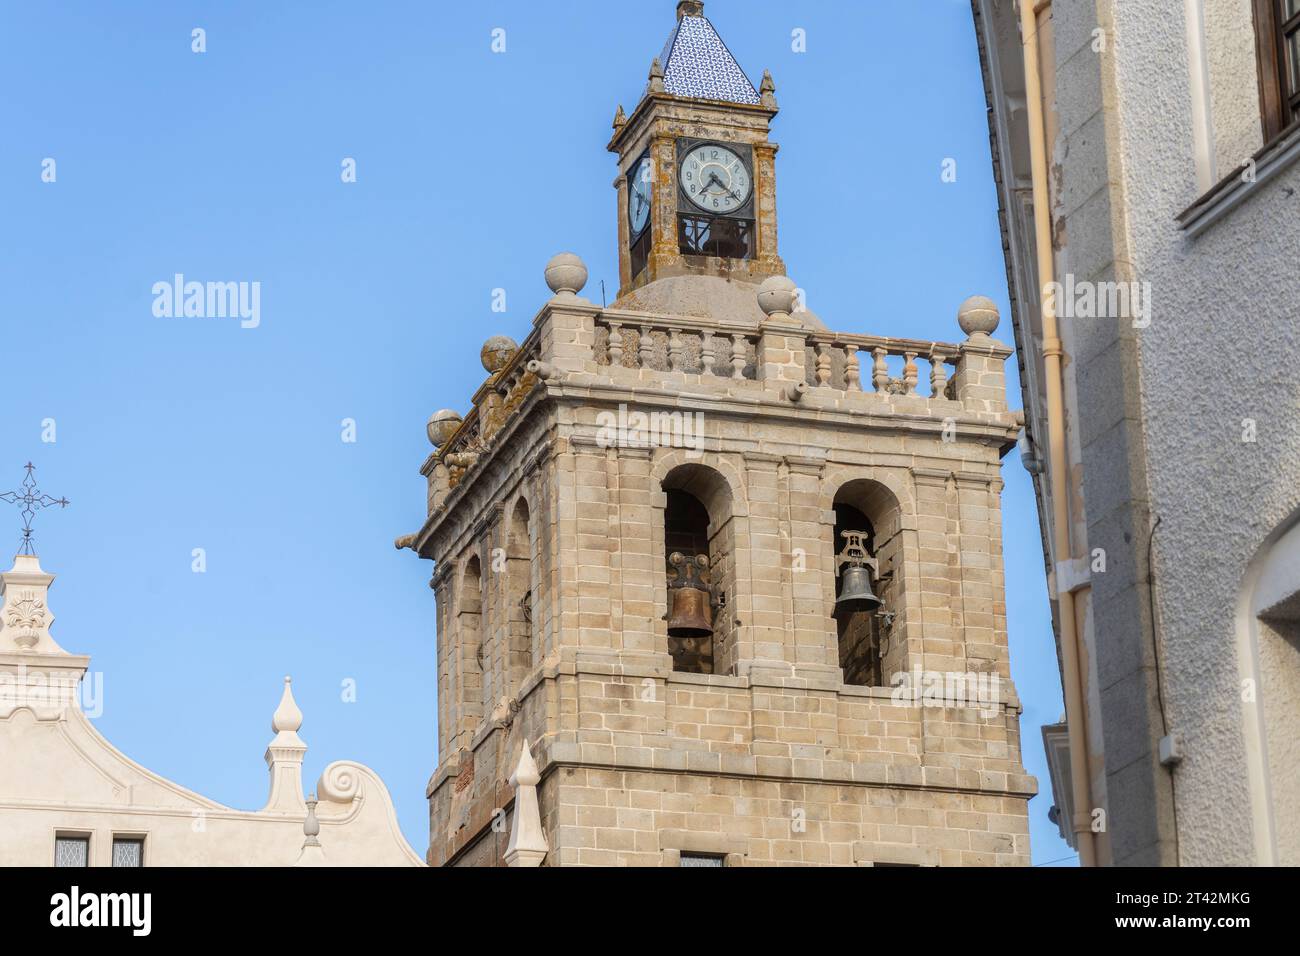 Beautiful religious tower in the town of Villanueva de la Serena, Badajoz, Spain Stock Photo